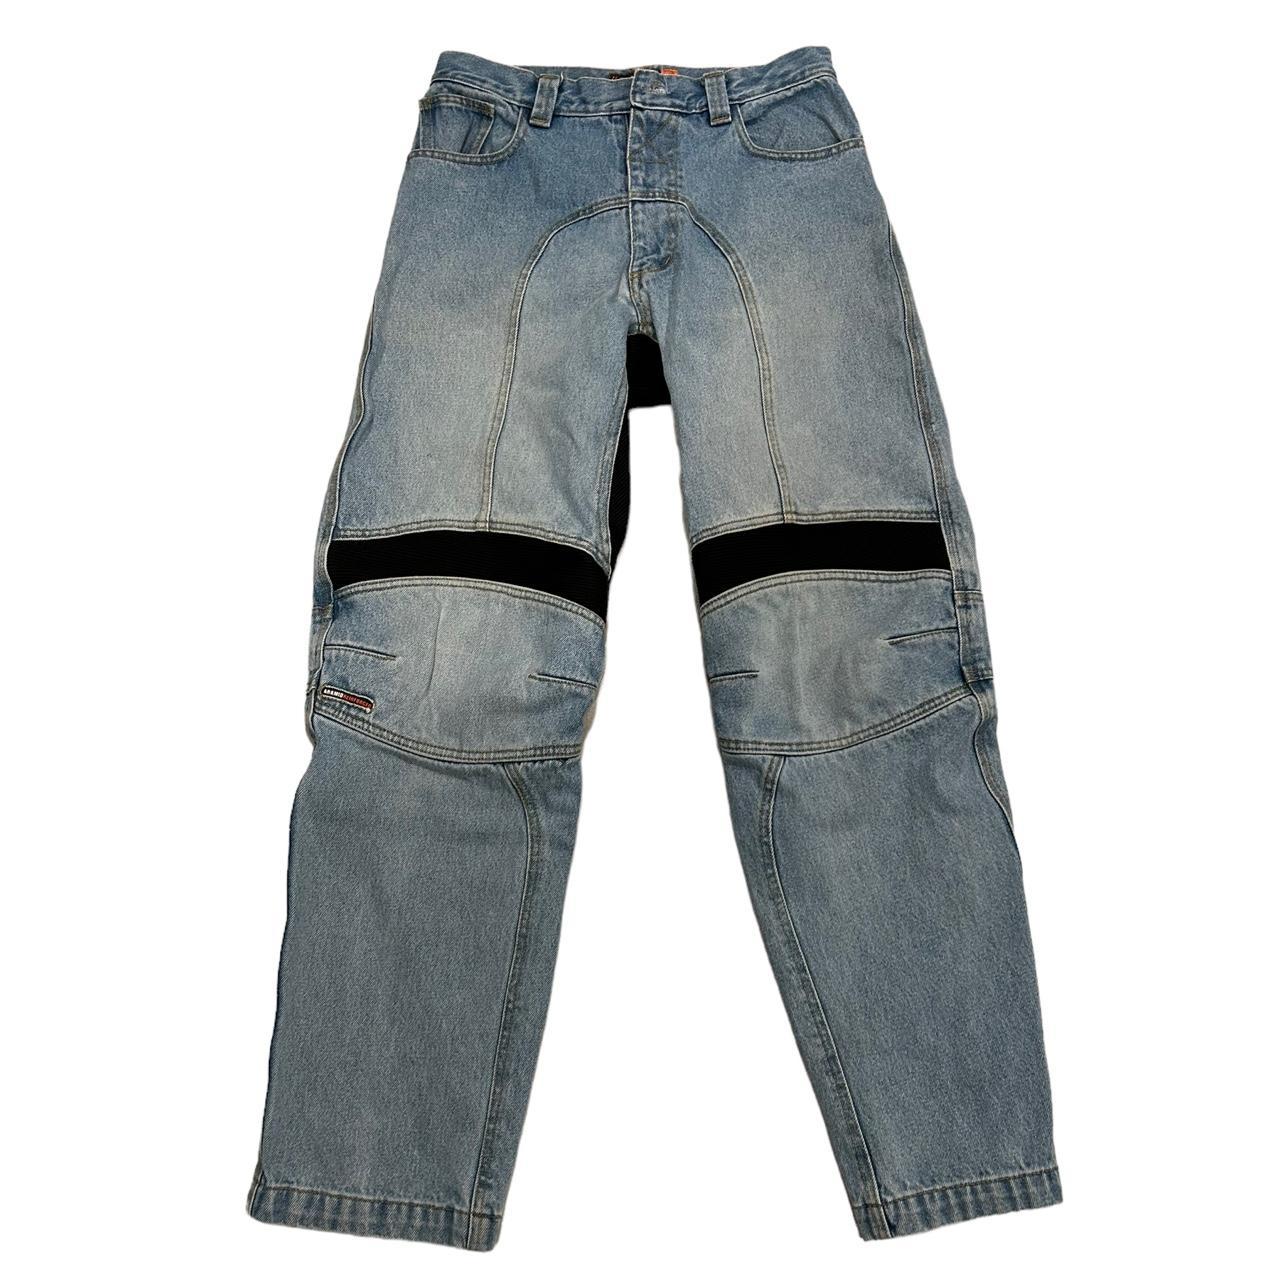 Icon Brand Men's Blue Jeans (3)